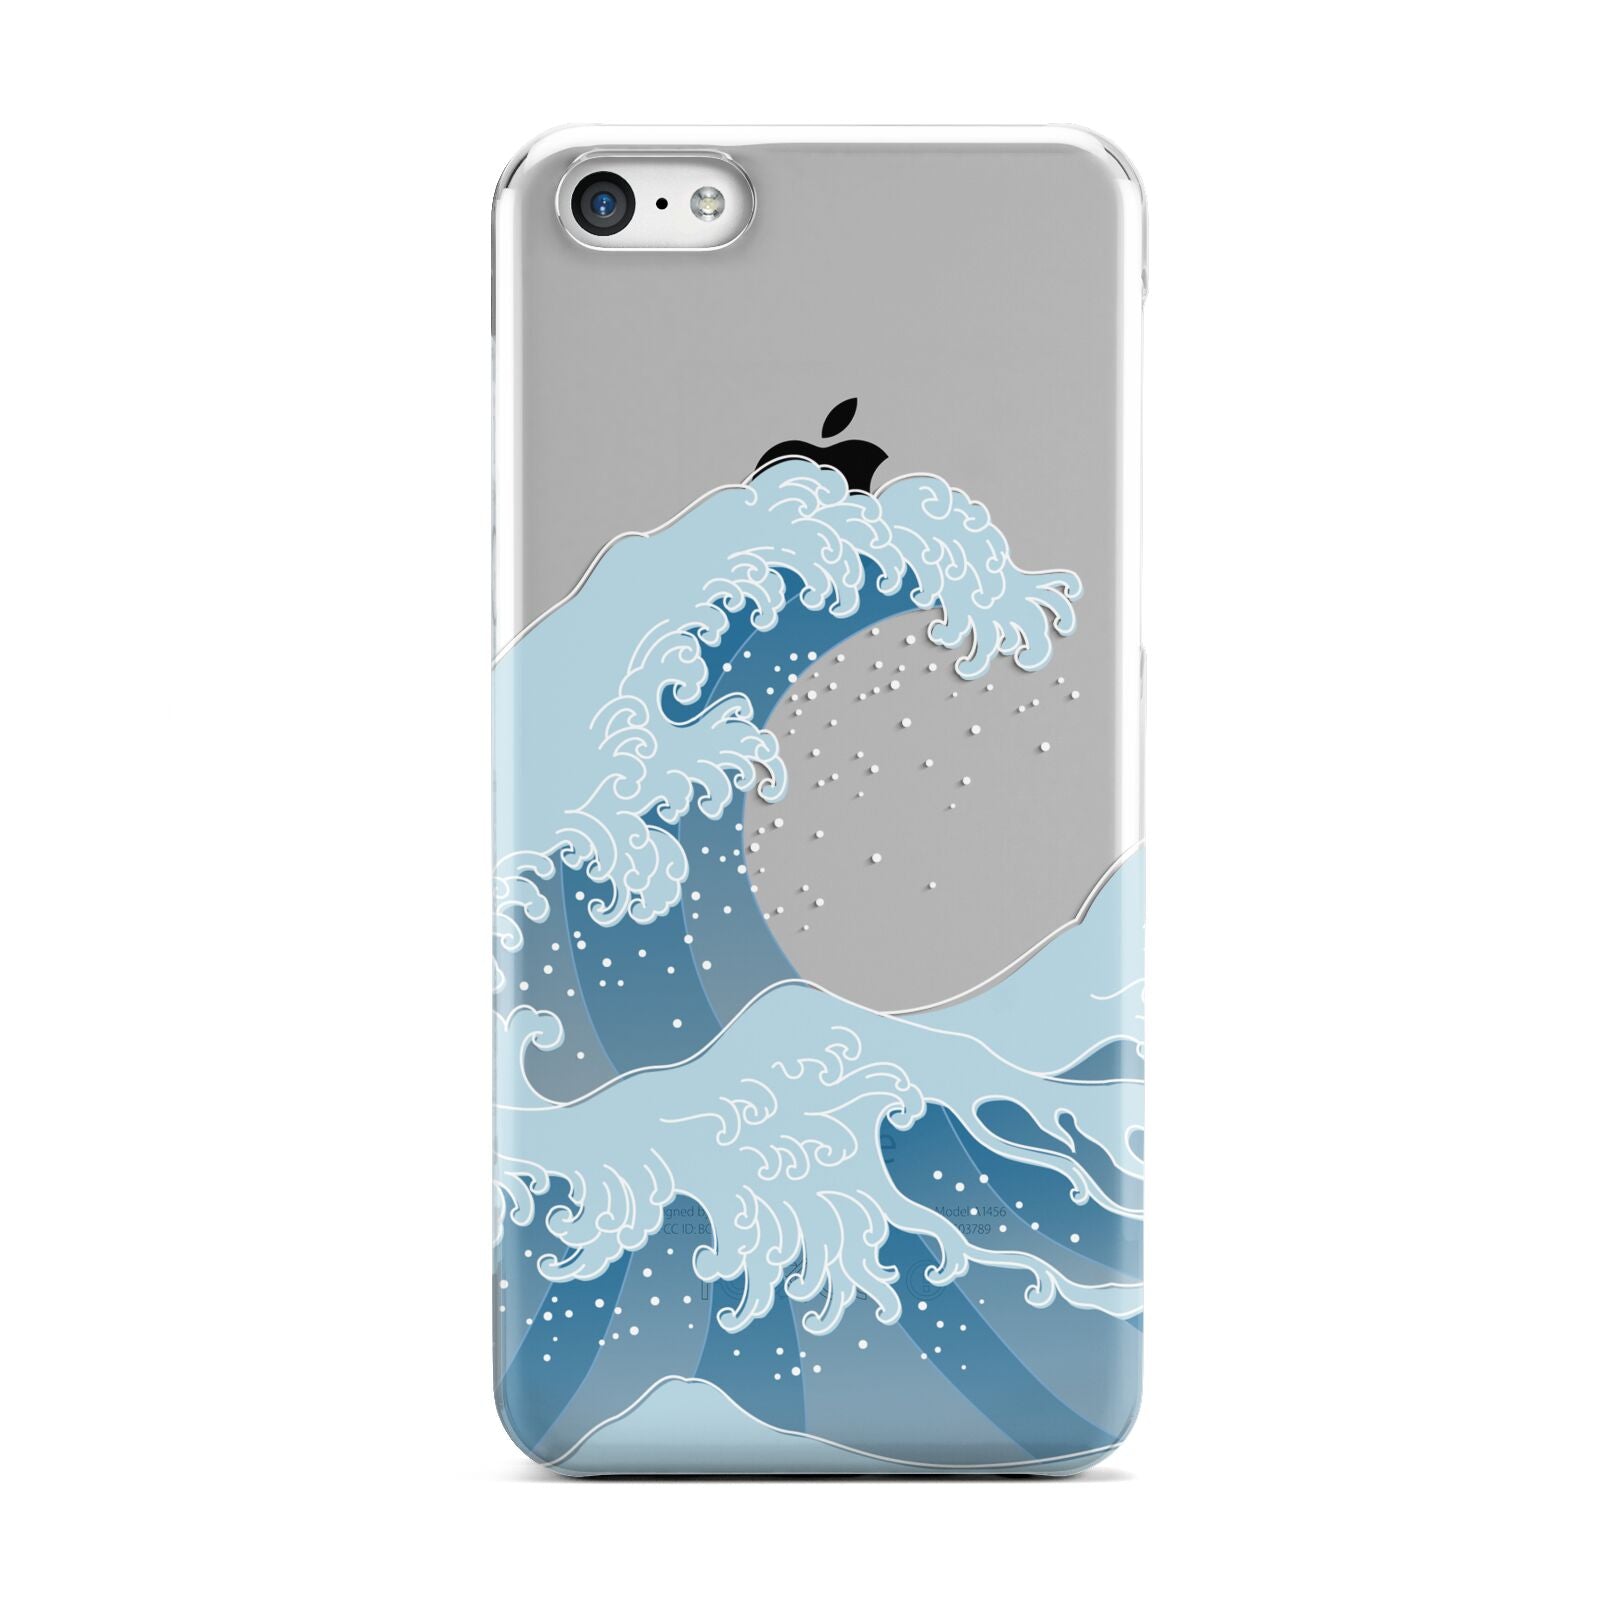 Great Wave Illustration Apple iPhone 5c Case